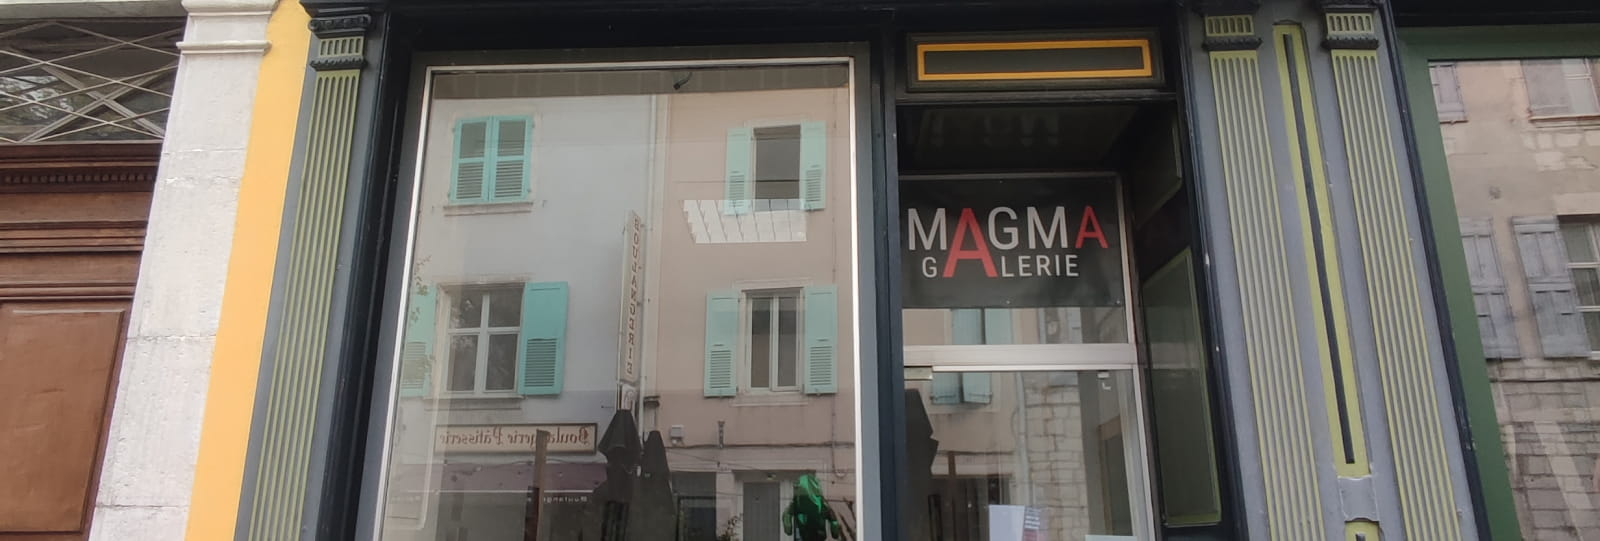 Magma Galerie